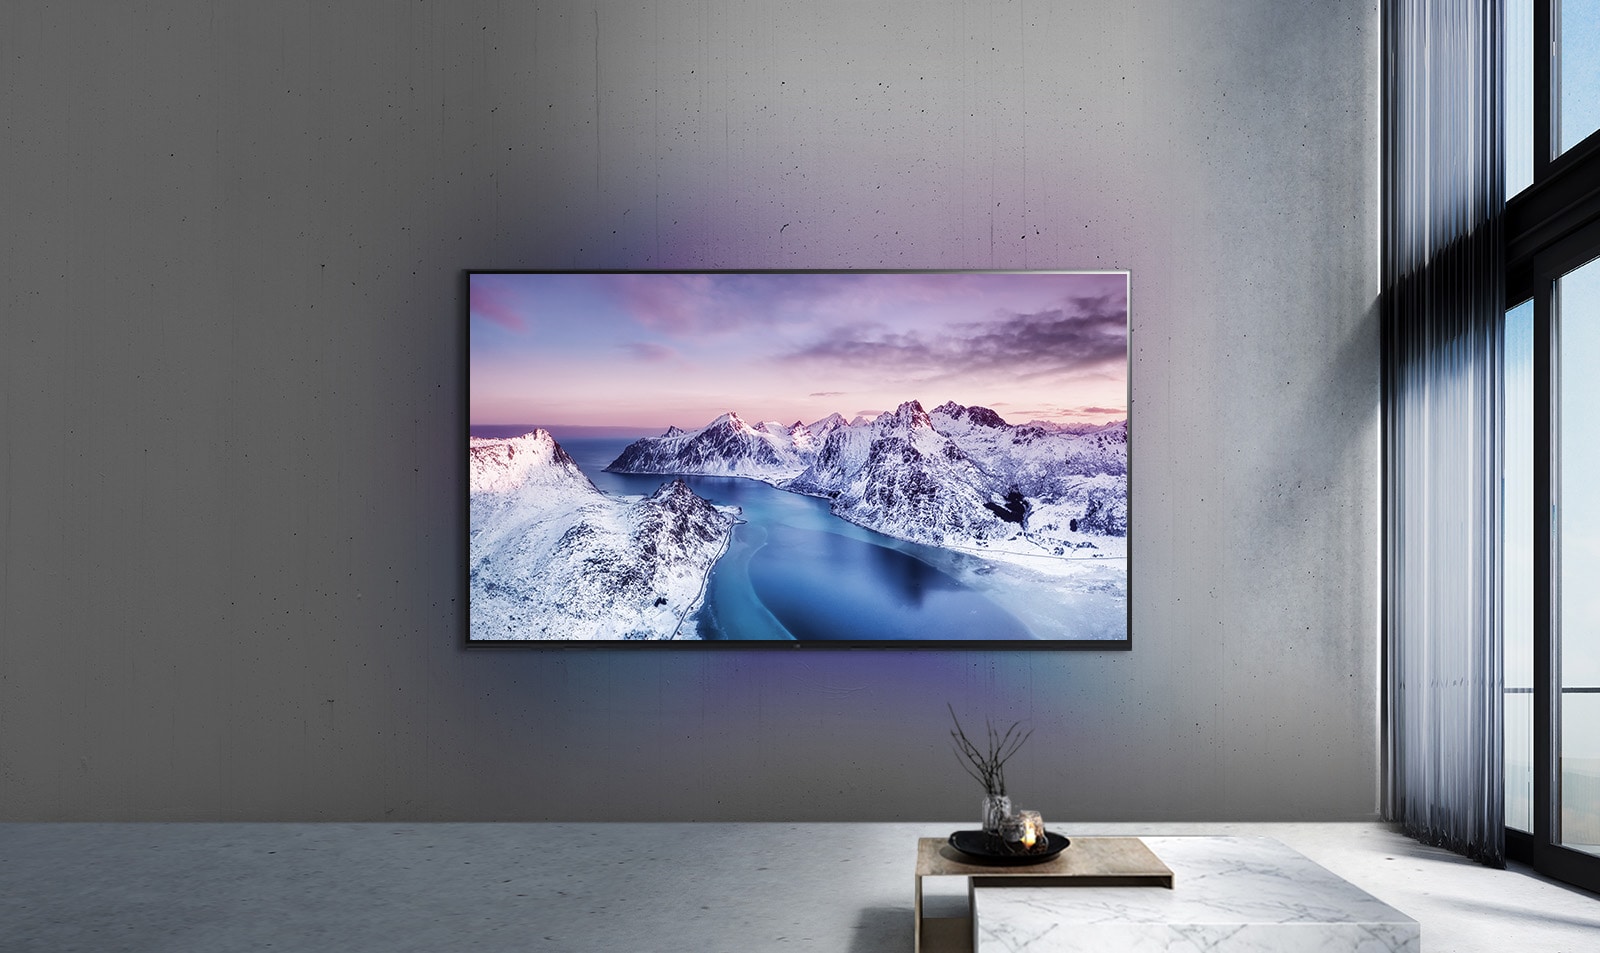 tv-uhd-02-ultra-large-screen-desktop